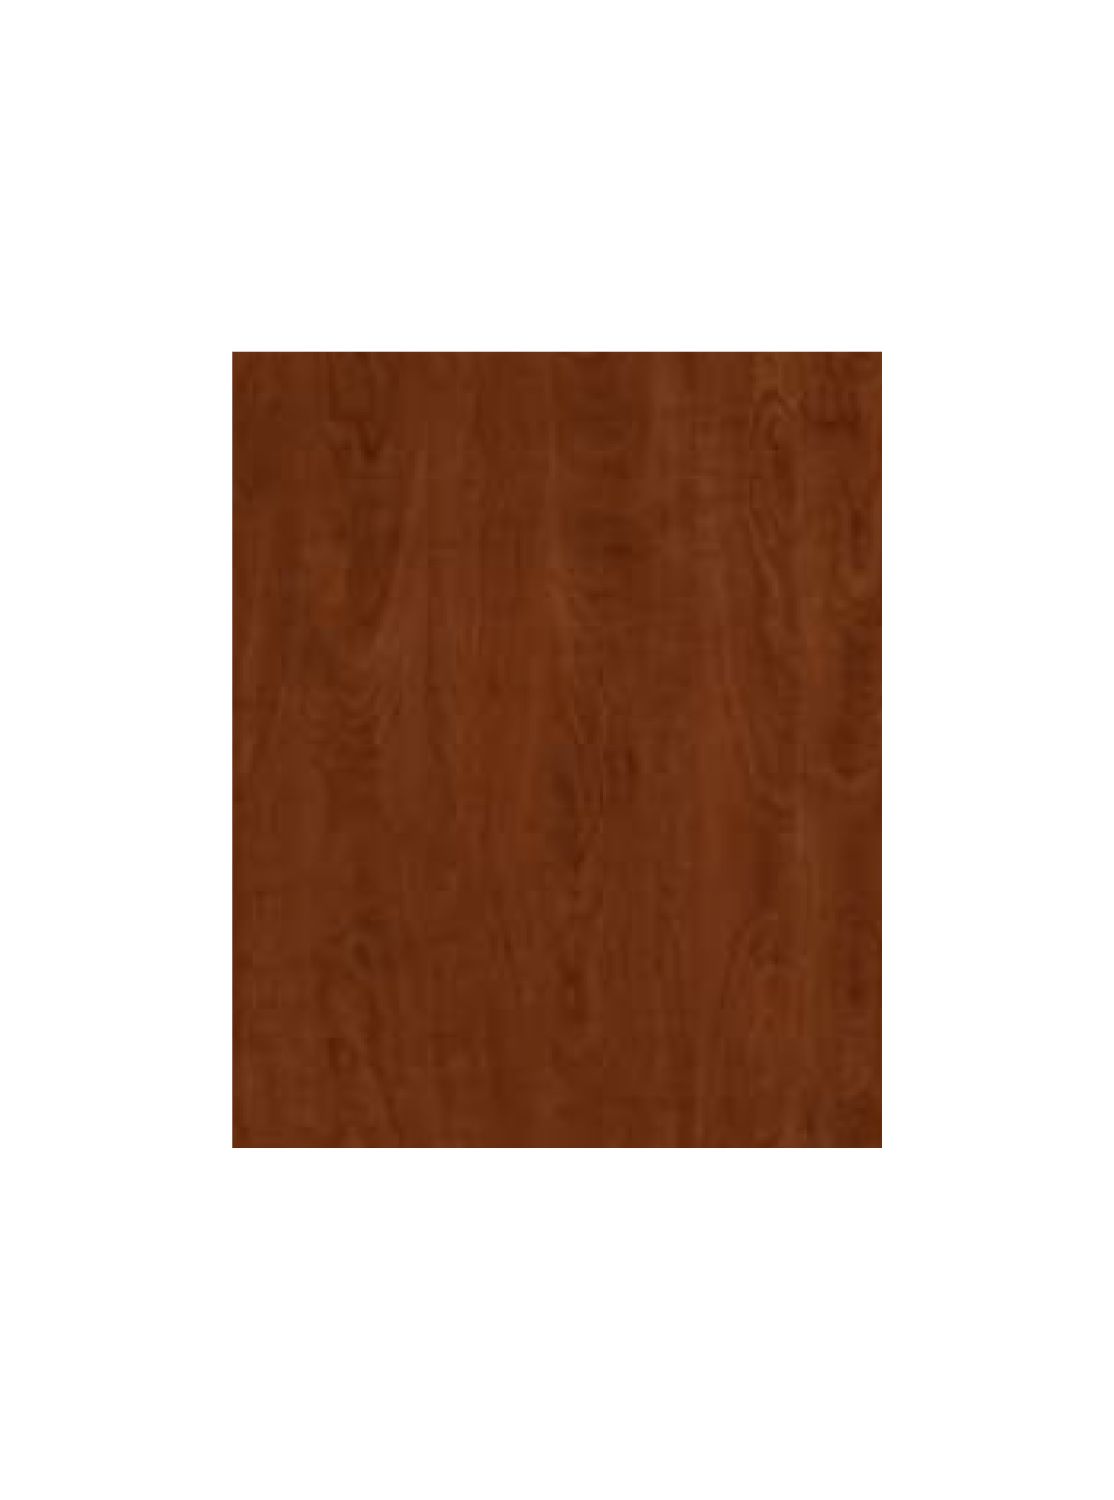 HPL UV+ wooden colors GENTAS 4391-1